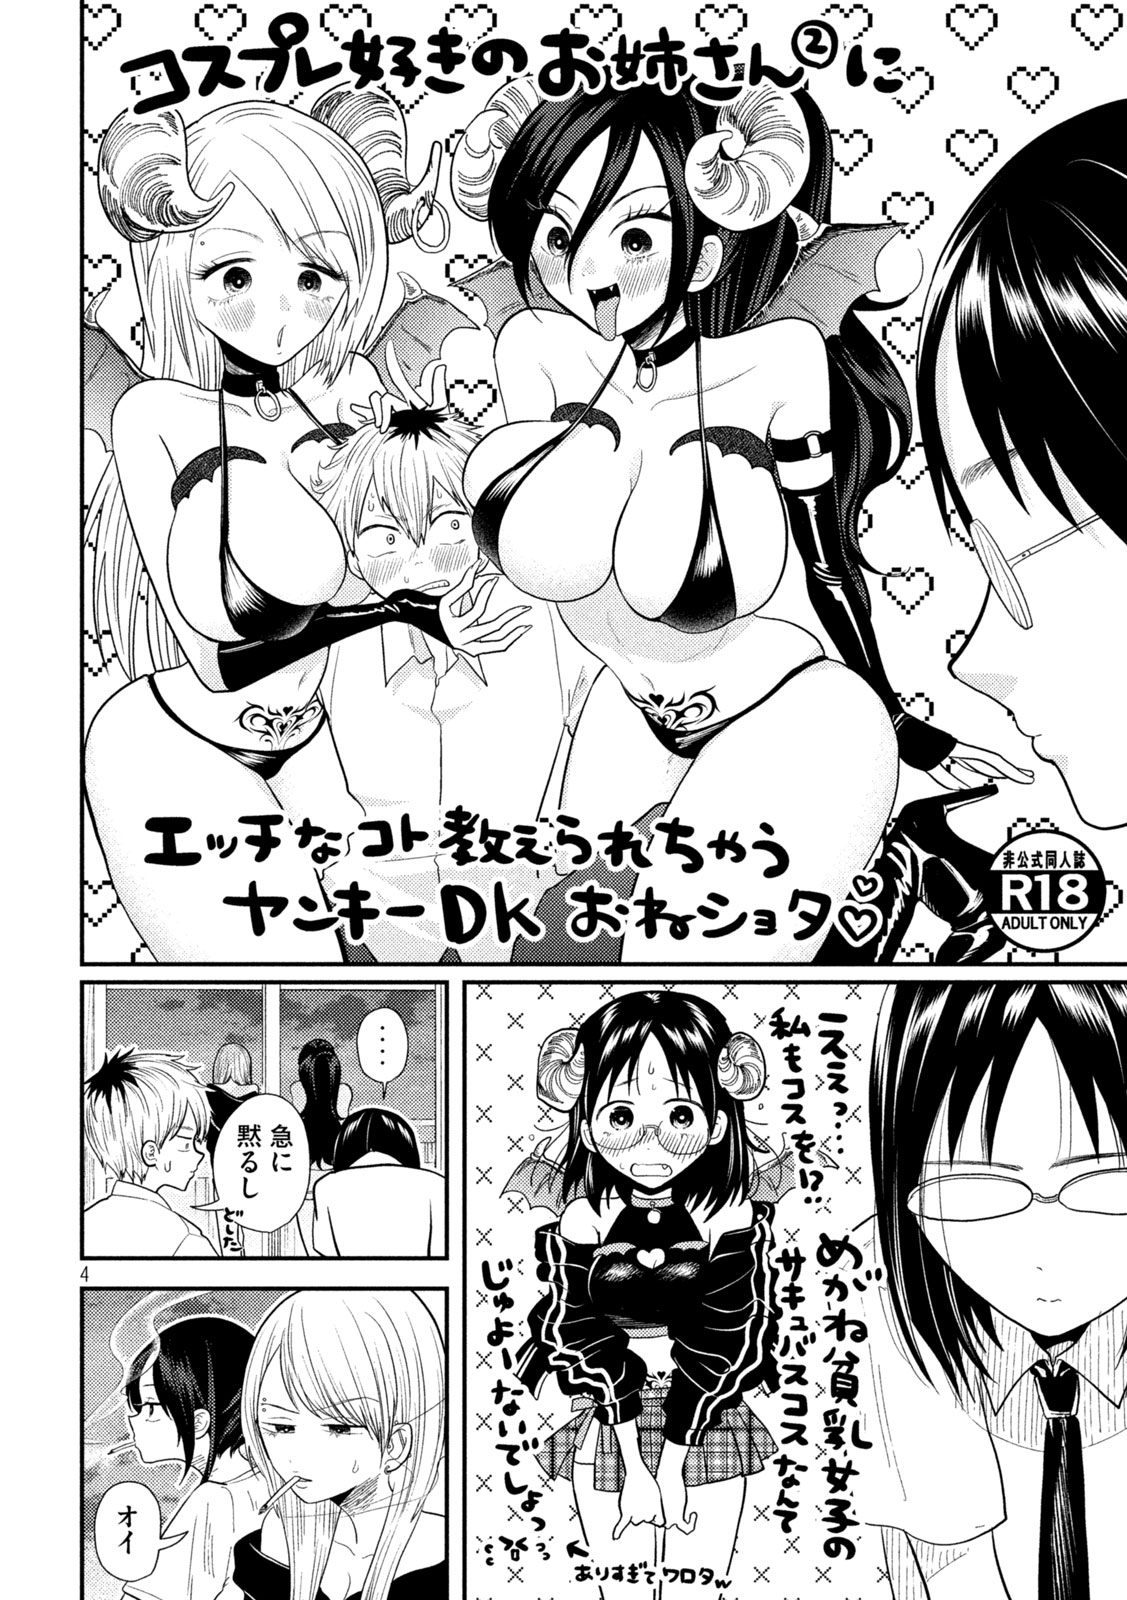 Heisei Haizanhei Sumire-chan - Chapter 18 - Page 4